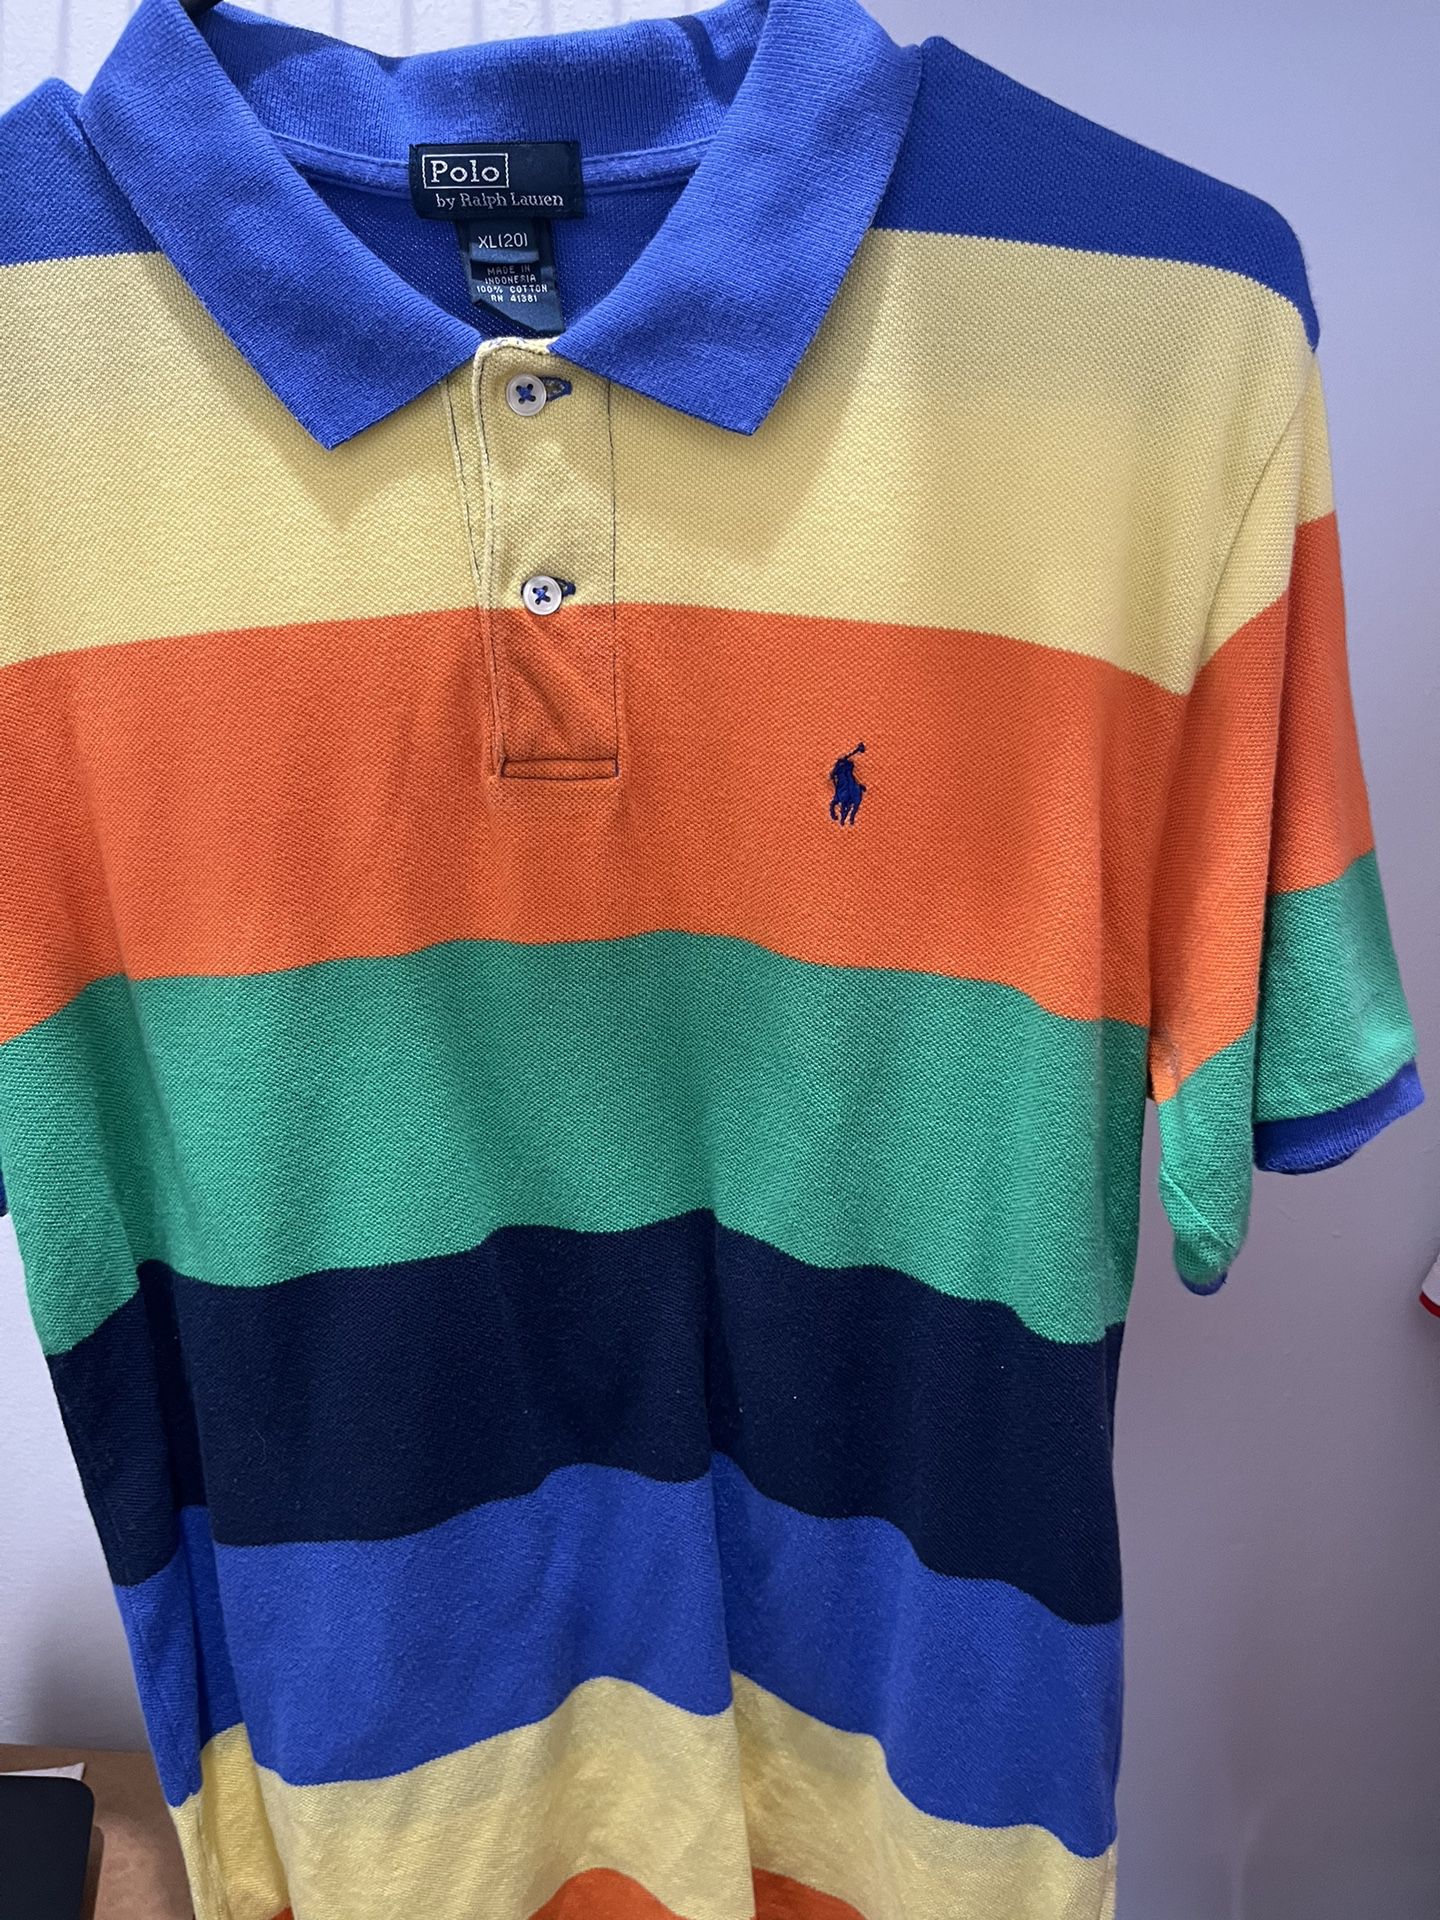 Polo Ralph Lauren Multi  Color Striped Shirt $20